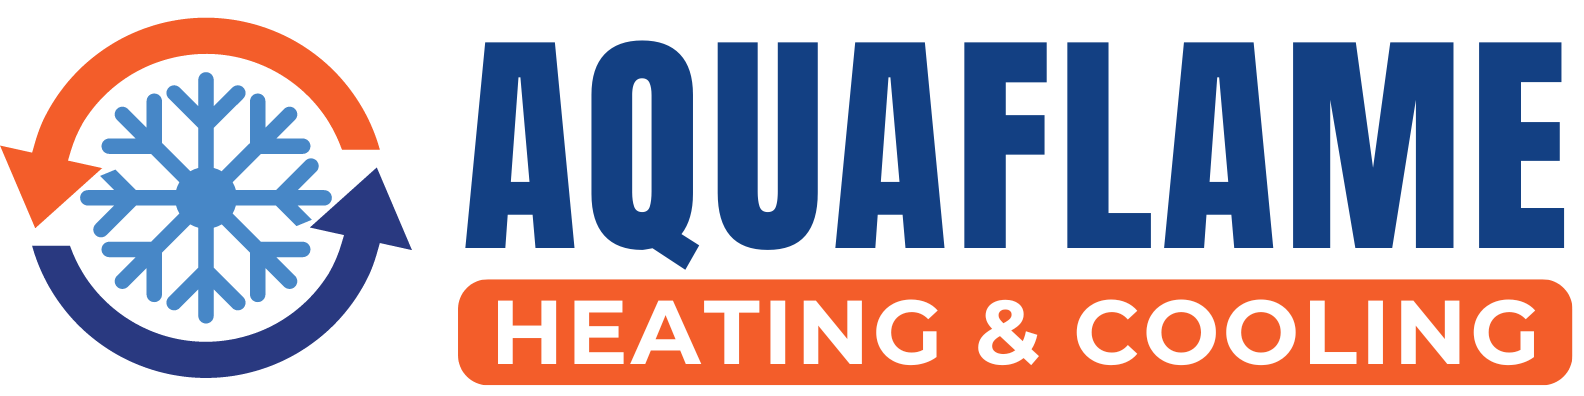 Aquaflame Heating & Cooling | HVAC Experts in Surrey, BC